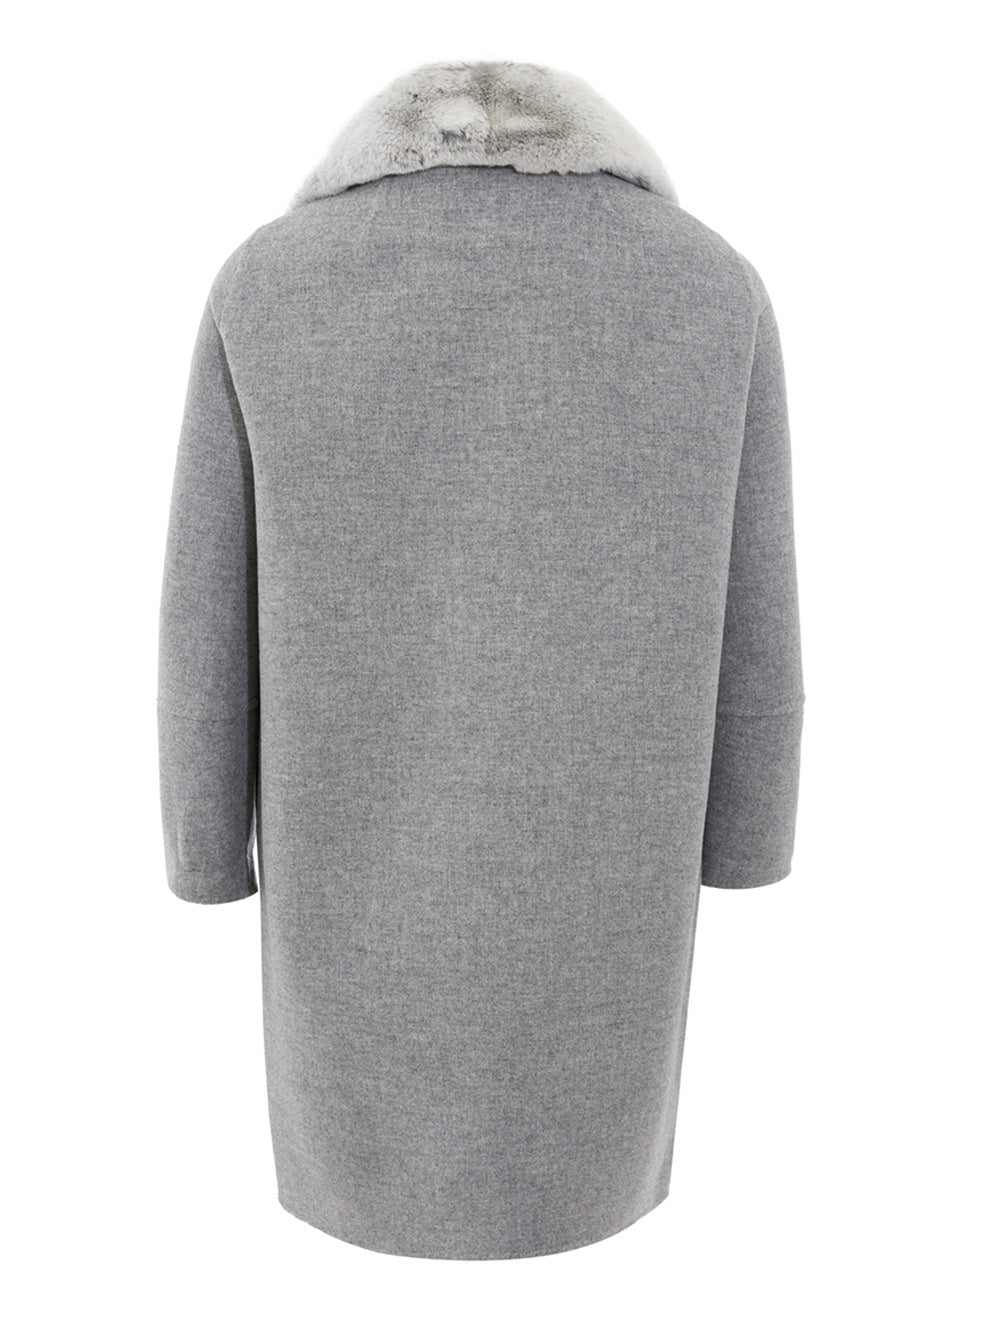 Grey Wool Coat with Fur Collar